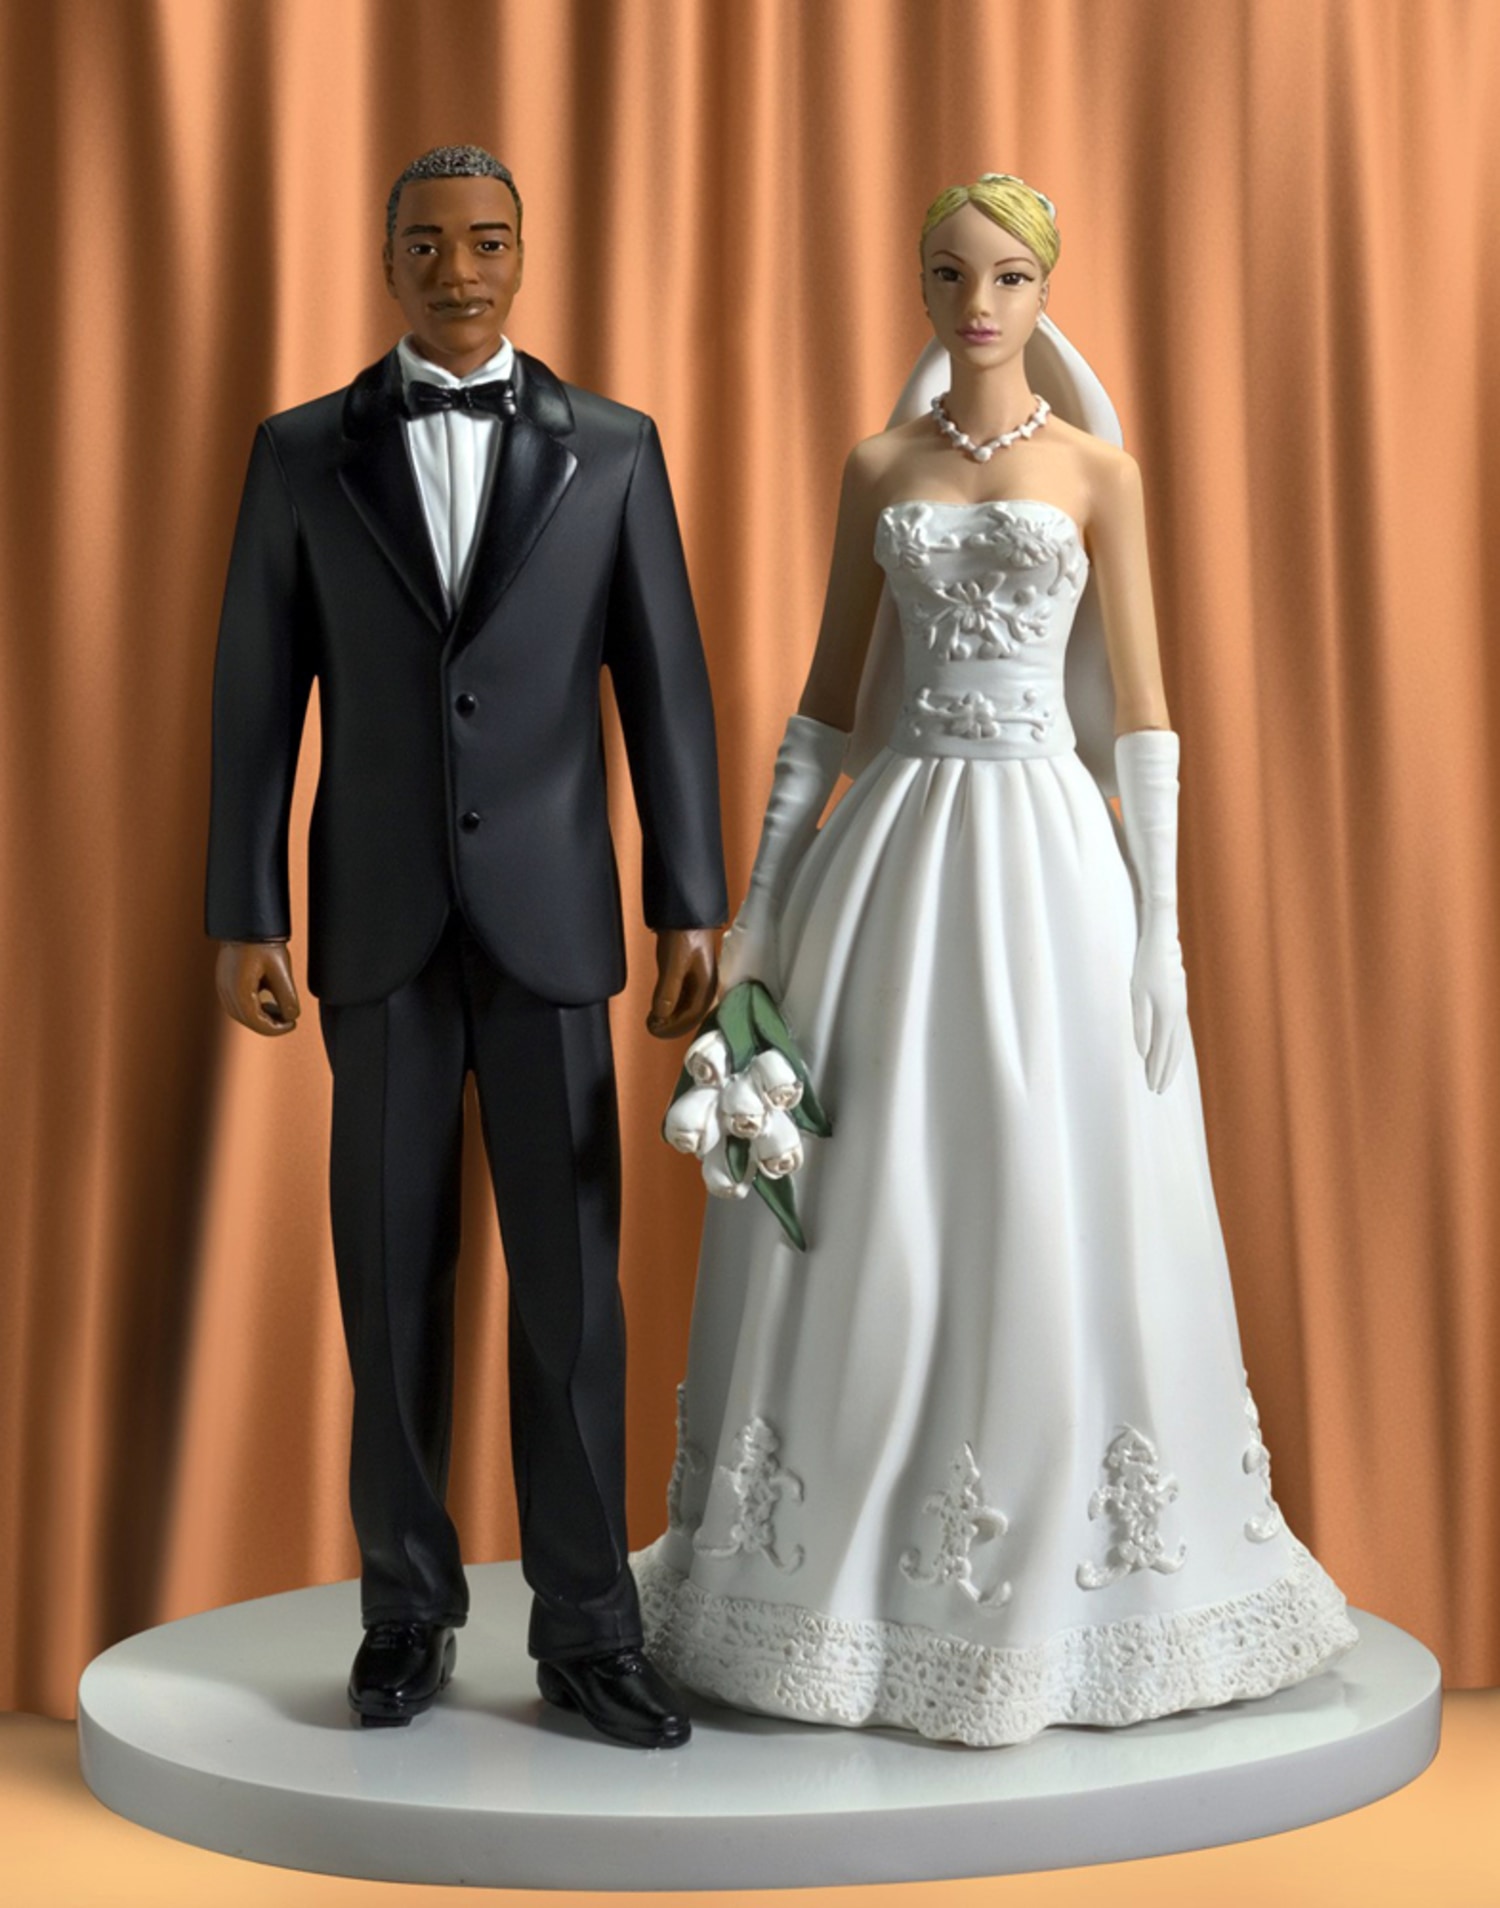 Caucasian or Hispanic Couple Figurine Wedding Cake Top Topper African American 